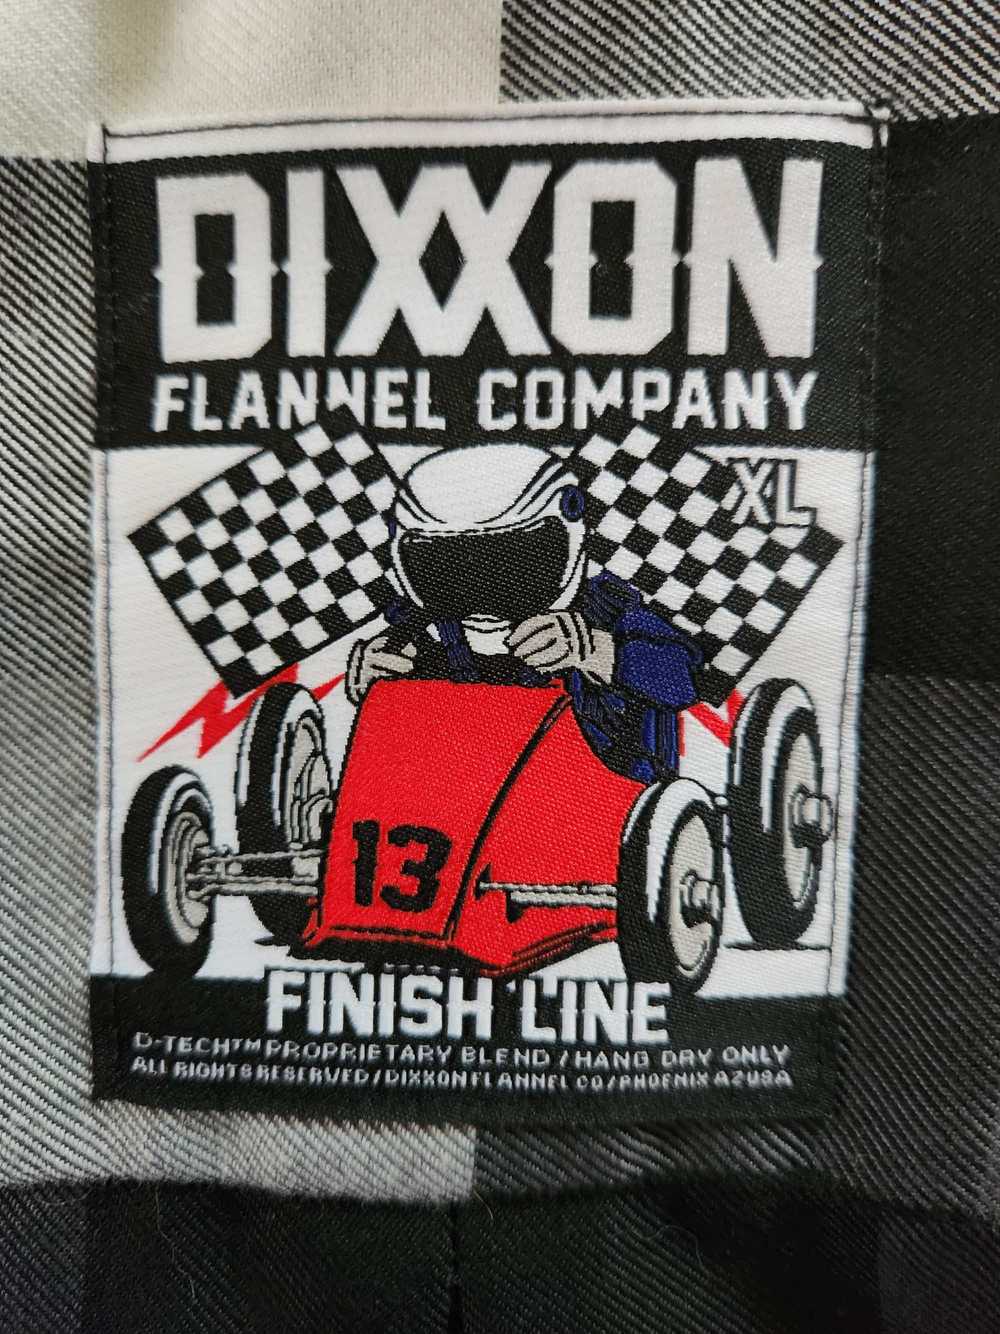 dixxon Women's Finish Line Flannel - image 3